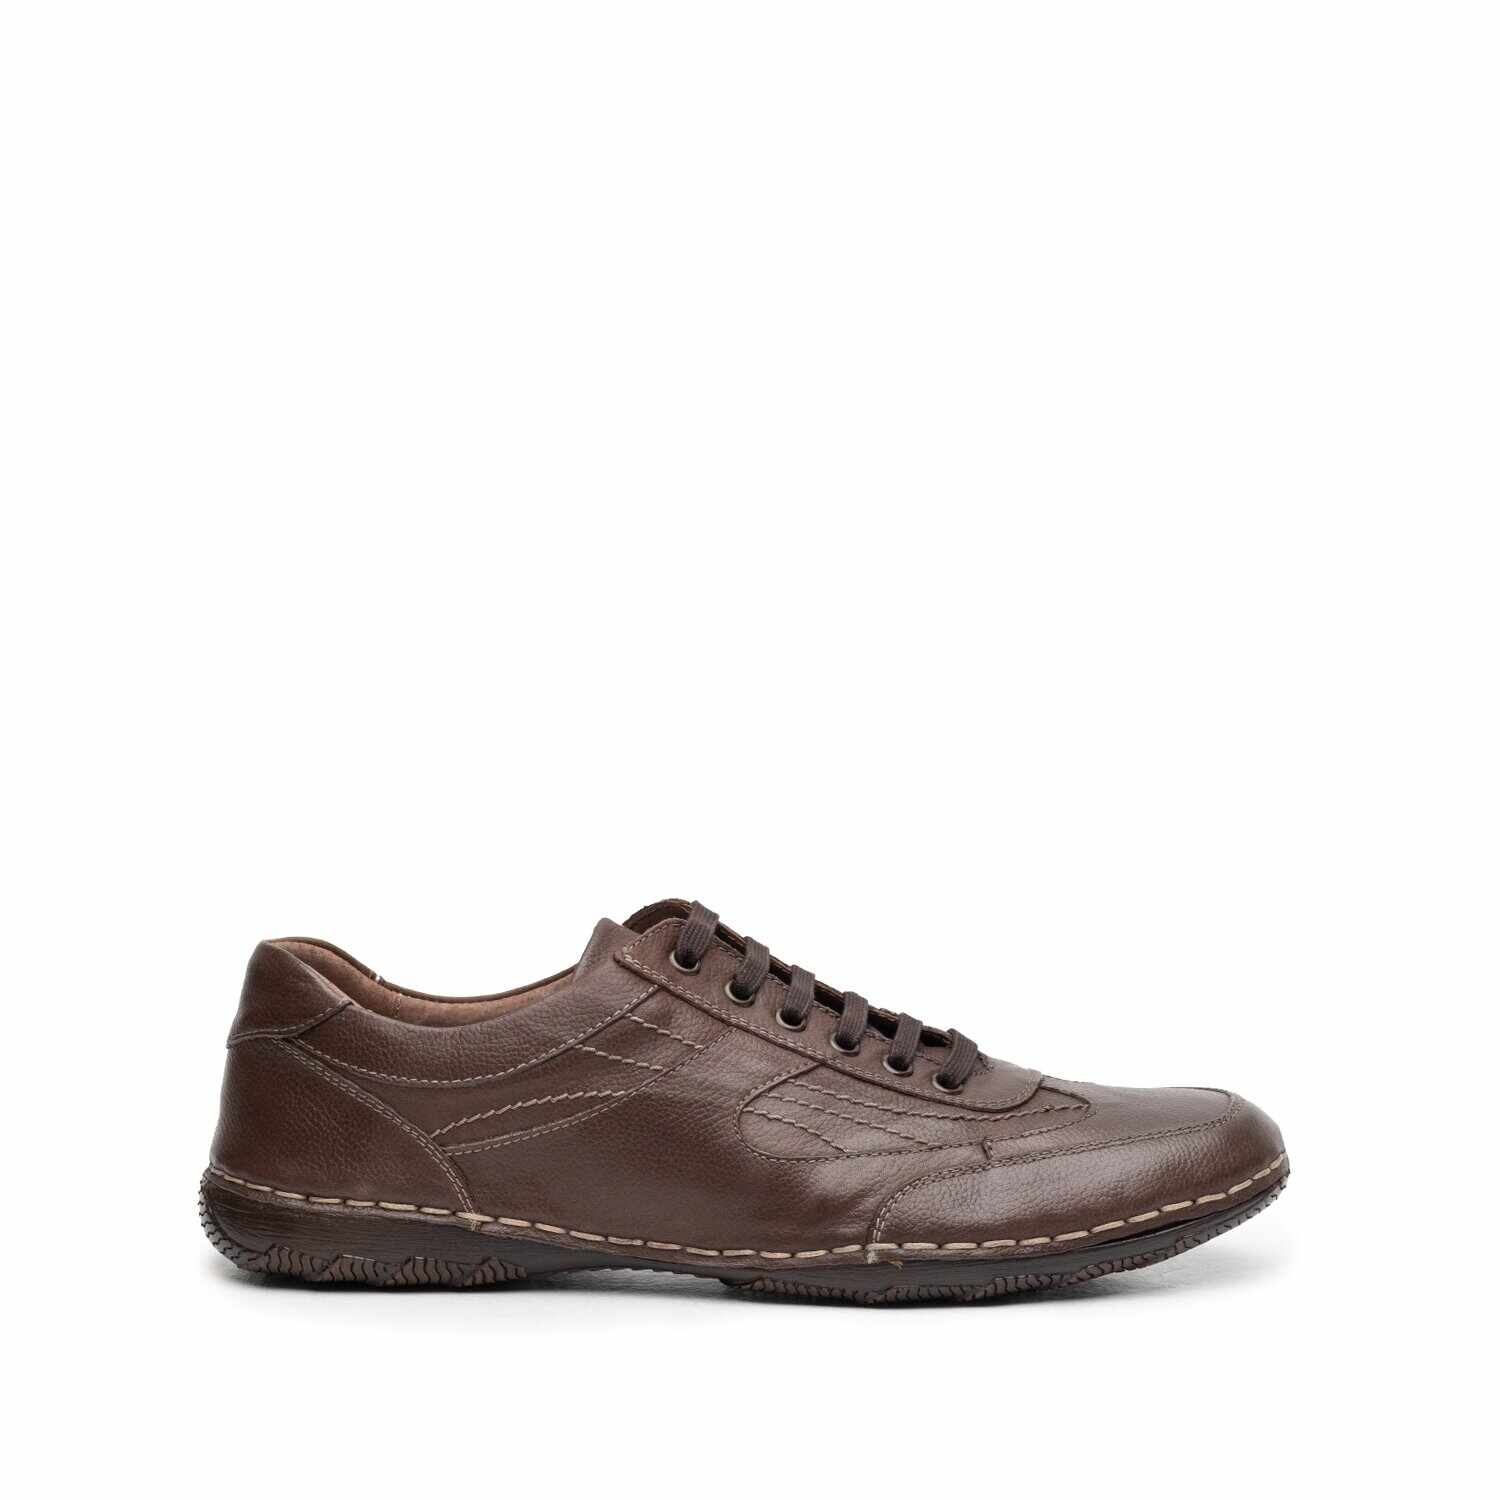 Pantofi casual barbati din piele naturala, Leofex - 620 maro box